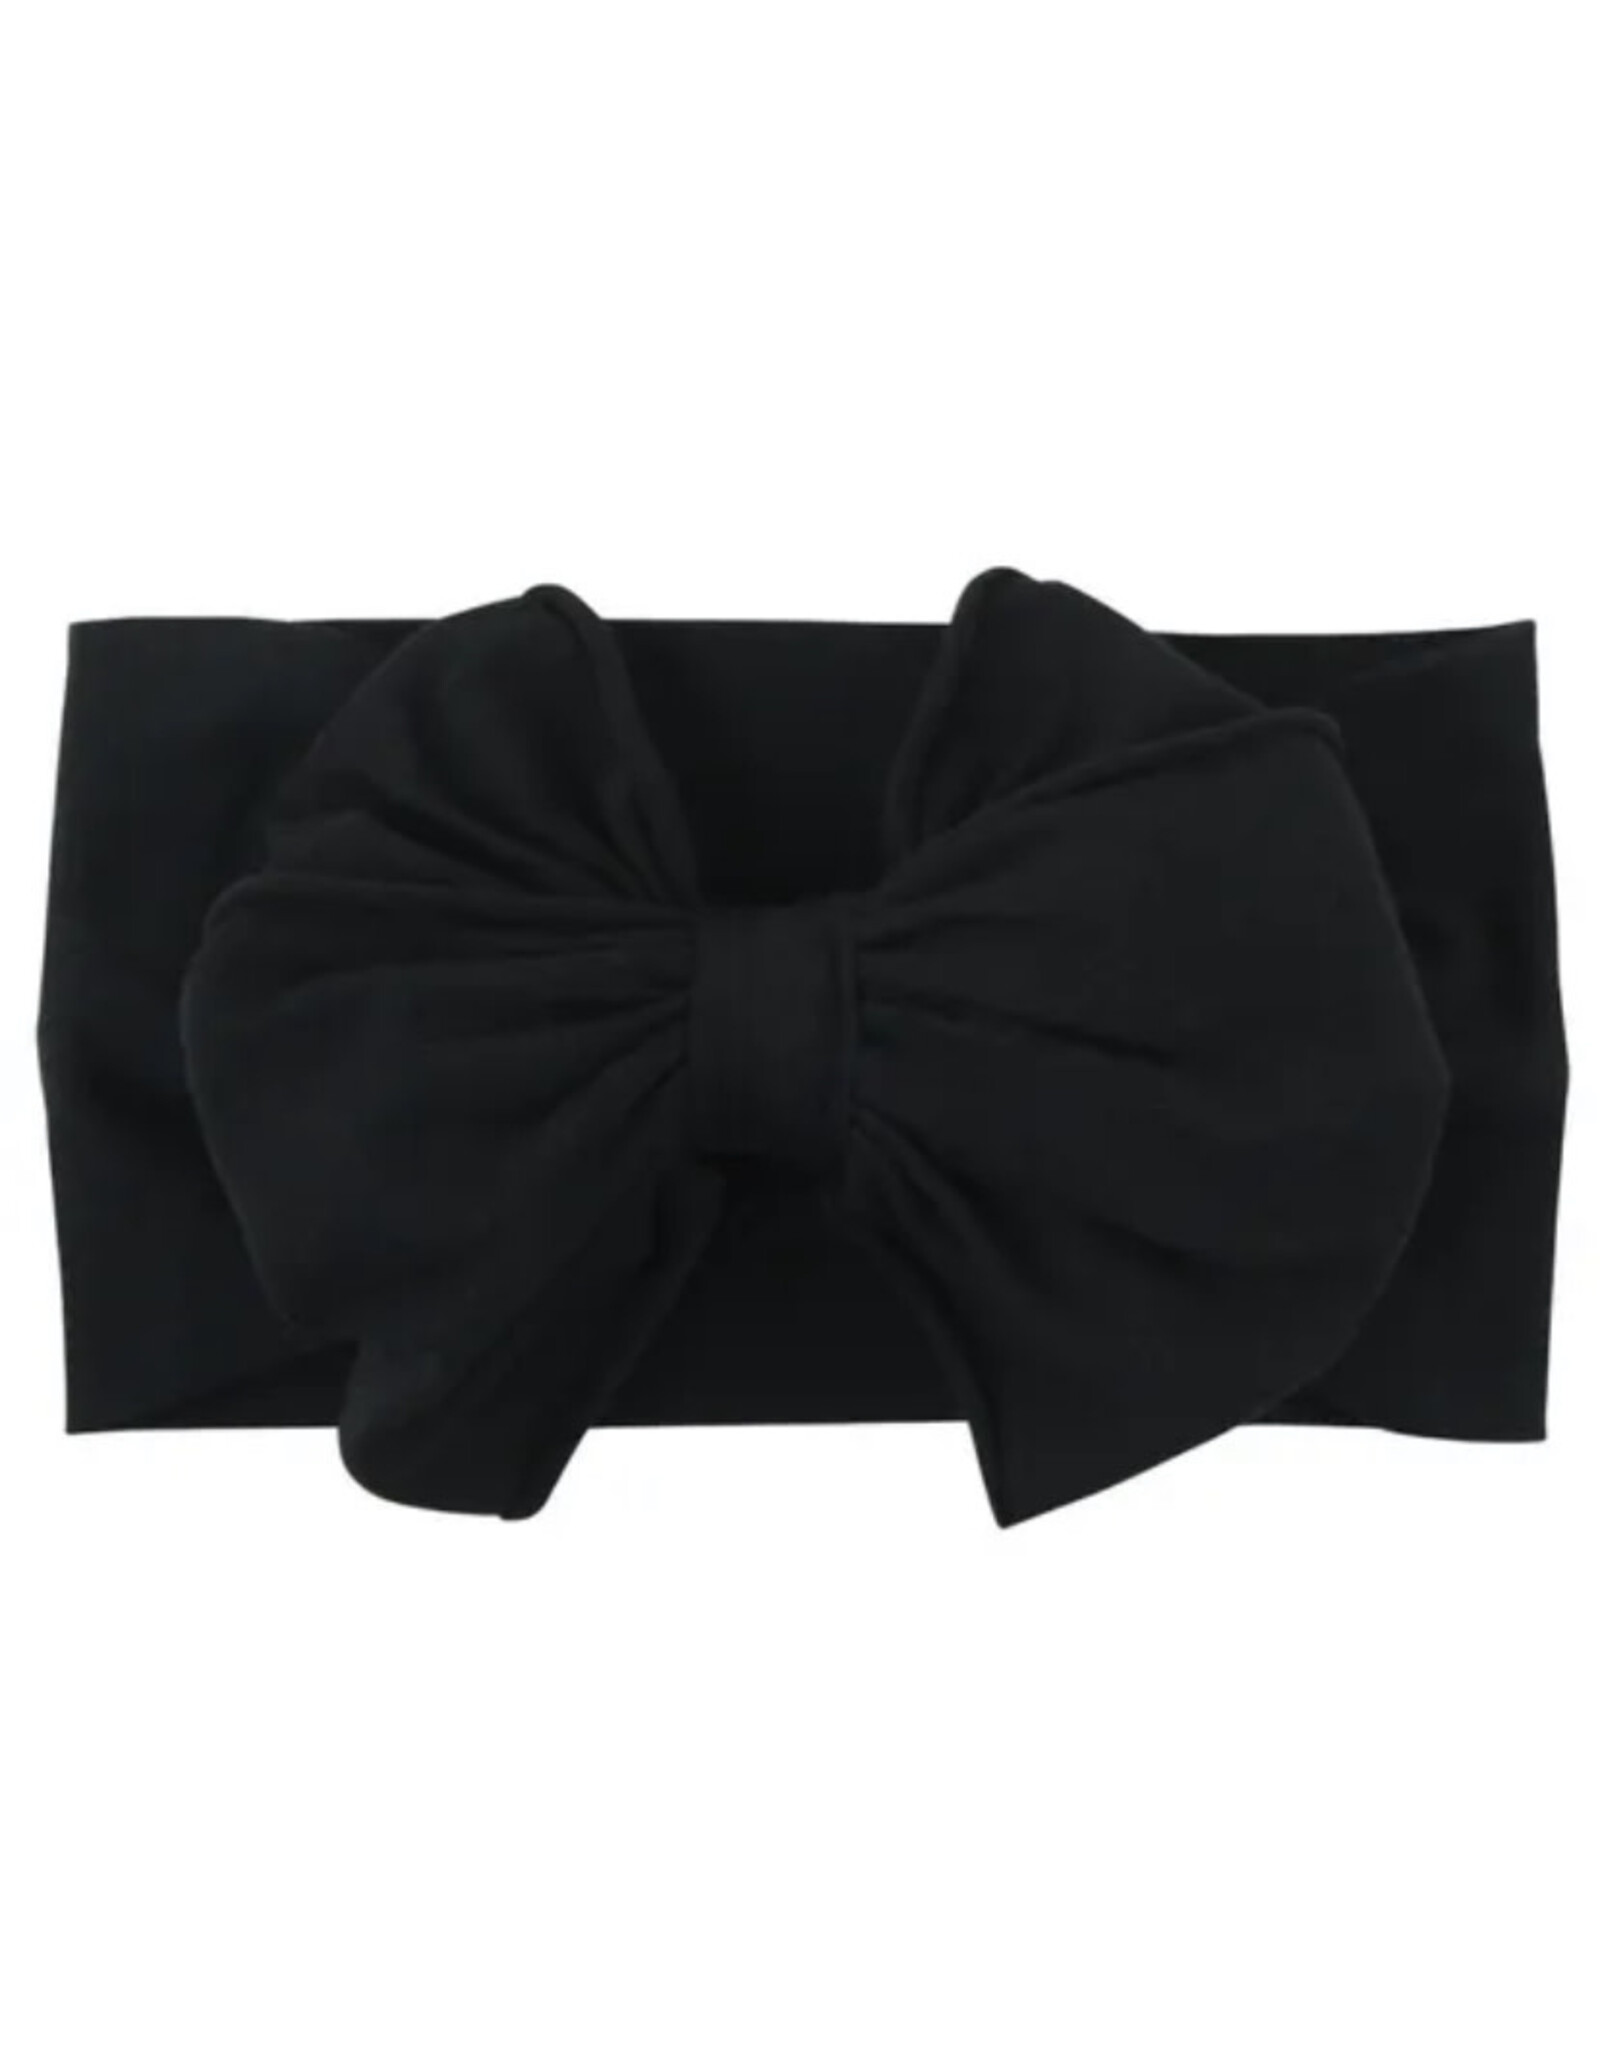 Ruffle Butts Ruffle Butts- Black Big Bow Headband